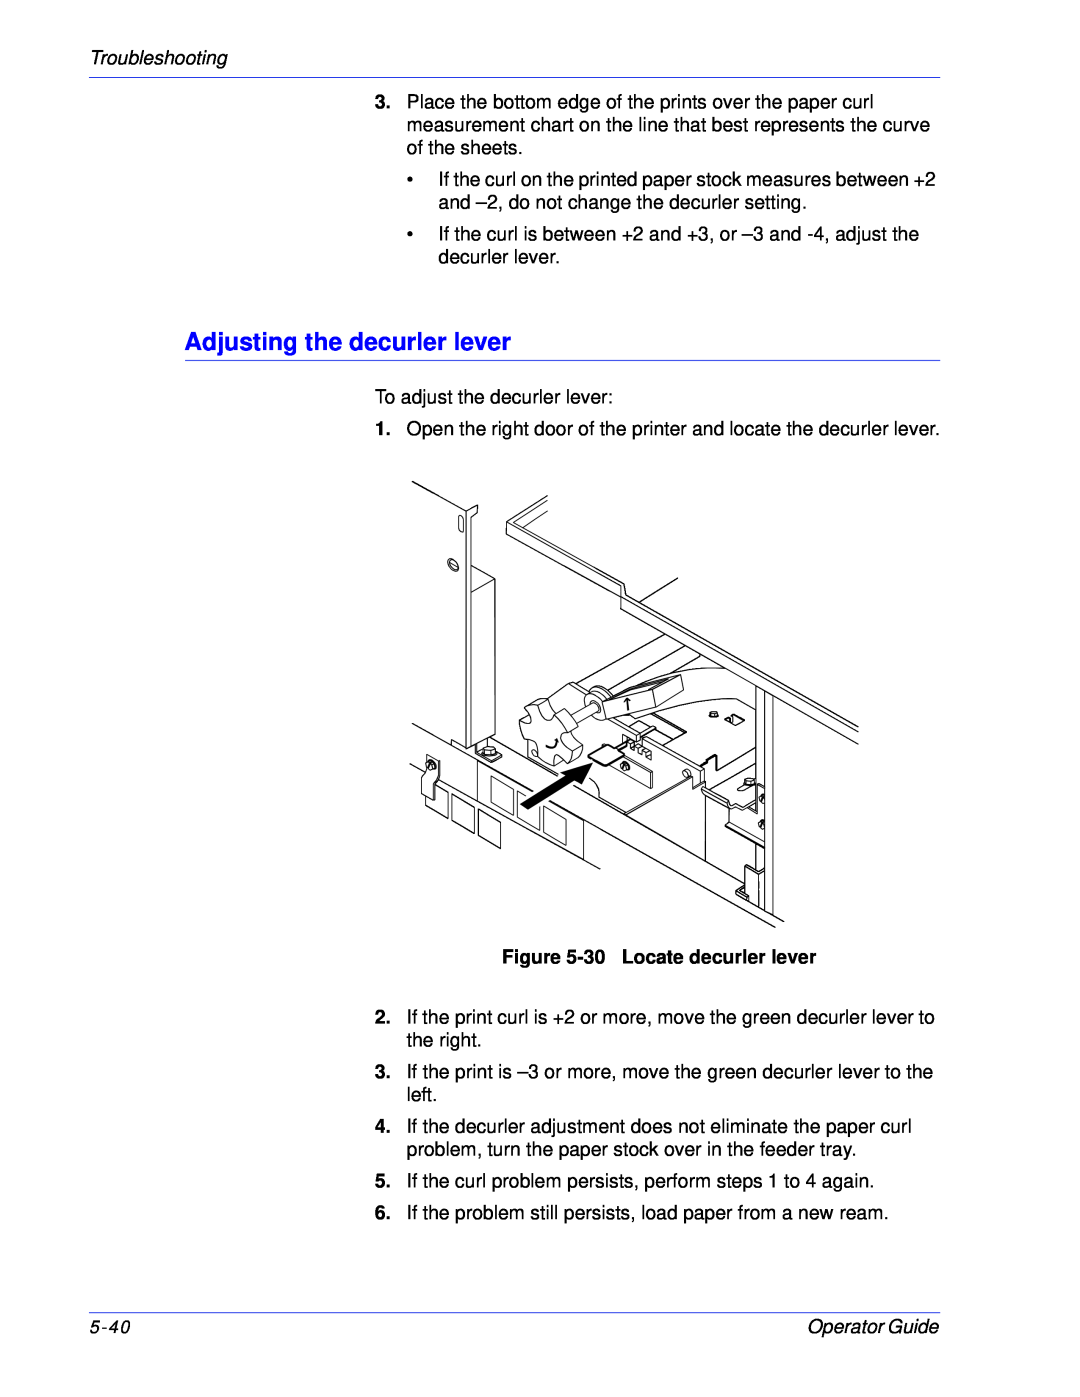 Xerox 100, 180 EPS manual Adjusting the decurler lever, Troubleshooting, 30Locate decurler lever 